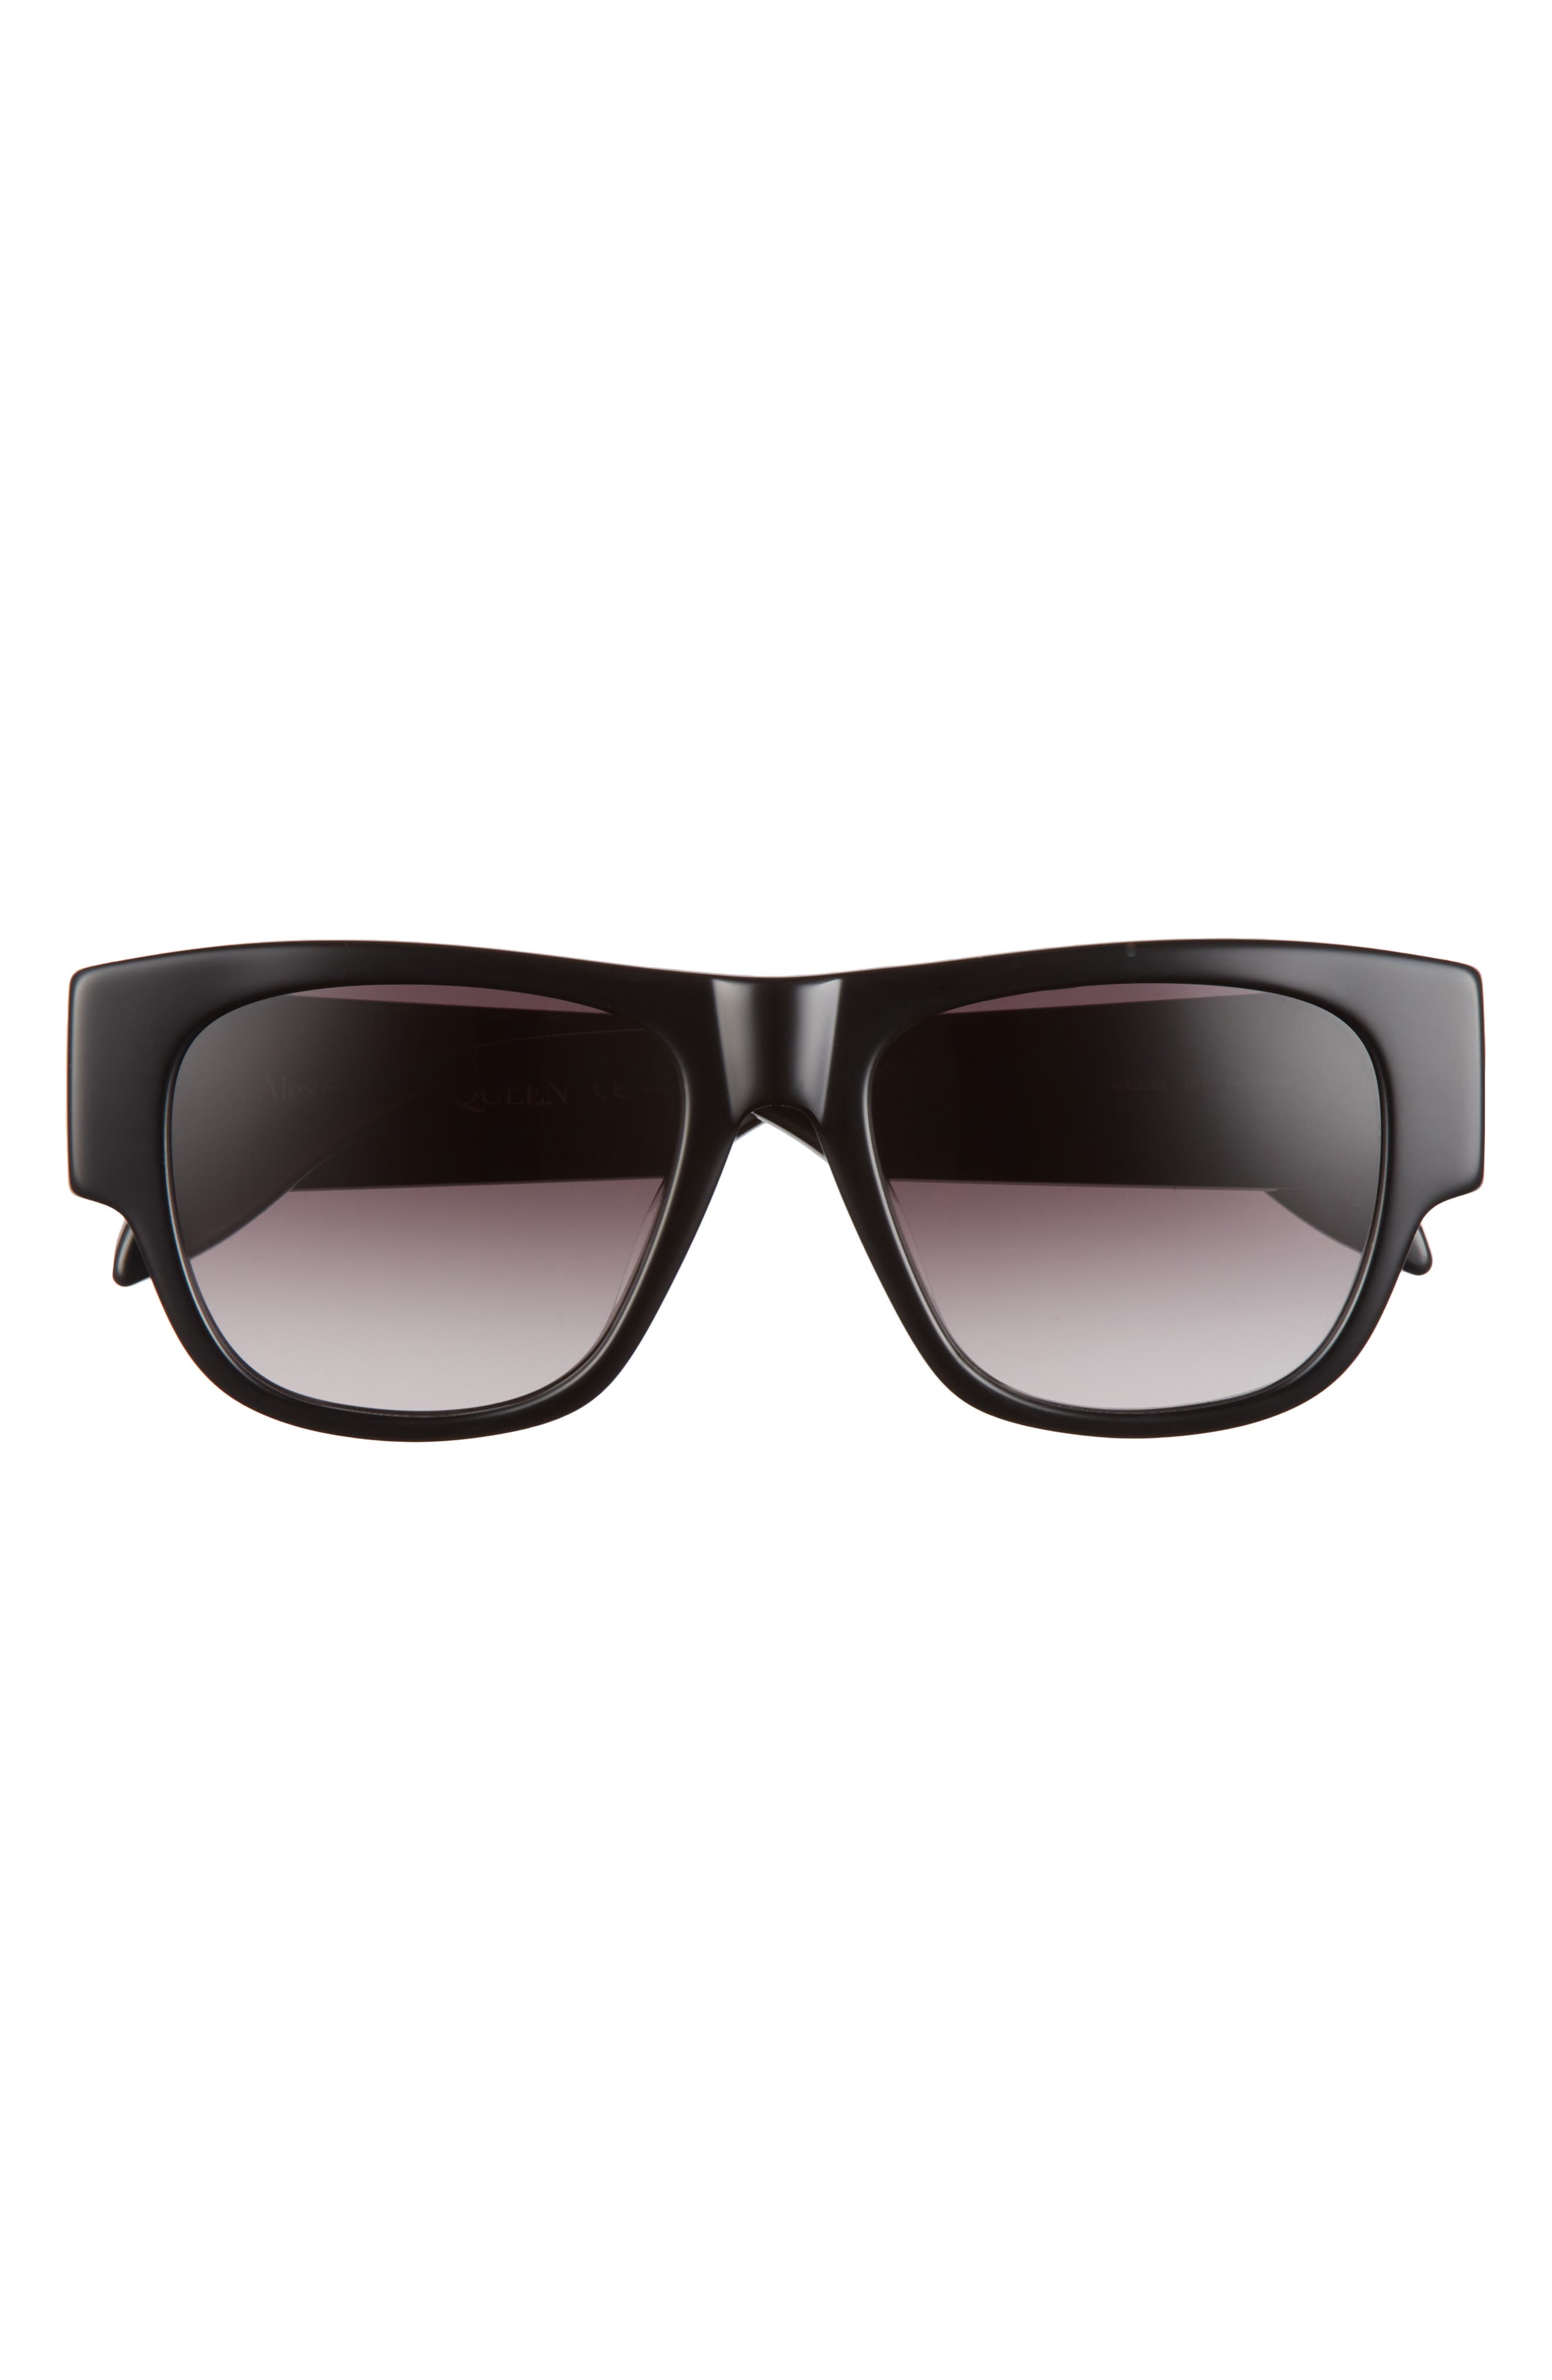 Alexander McQueen 54mm Rectangular Sunglasses in Black at Nordstrom